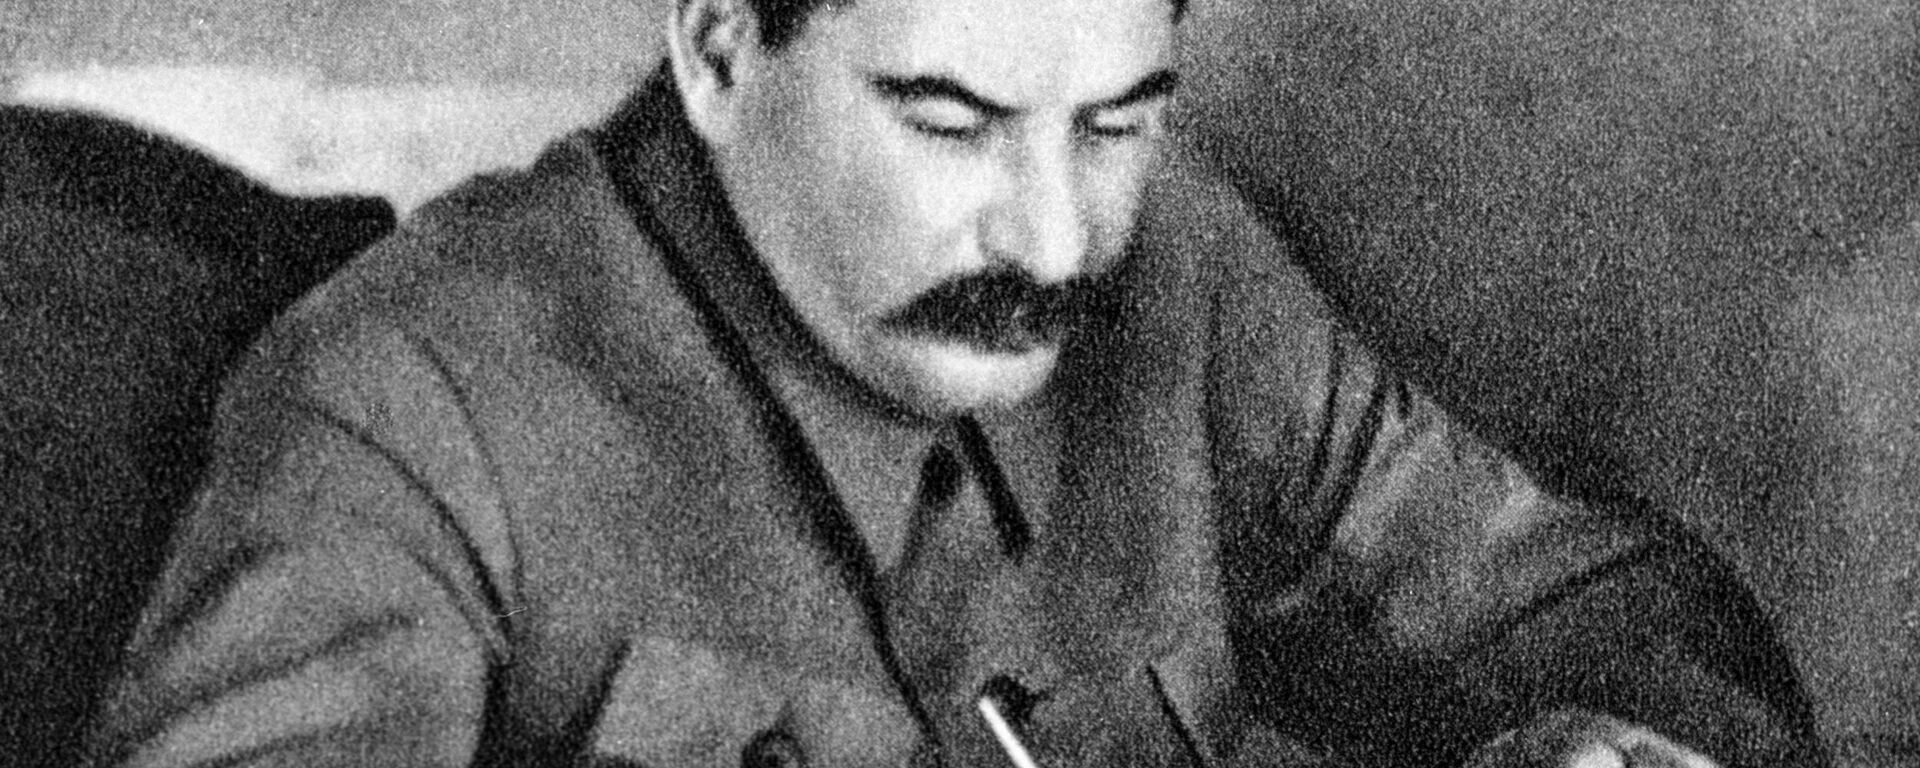 Iósif Stalin - Sputnik Mundo, 1920, 21.12.2020